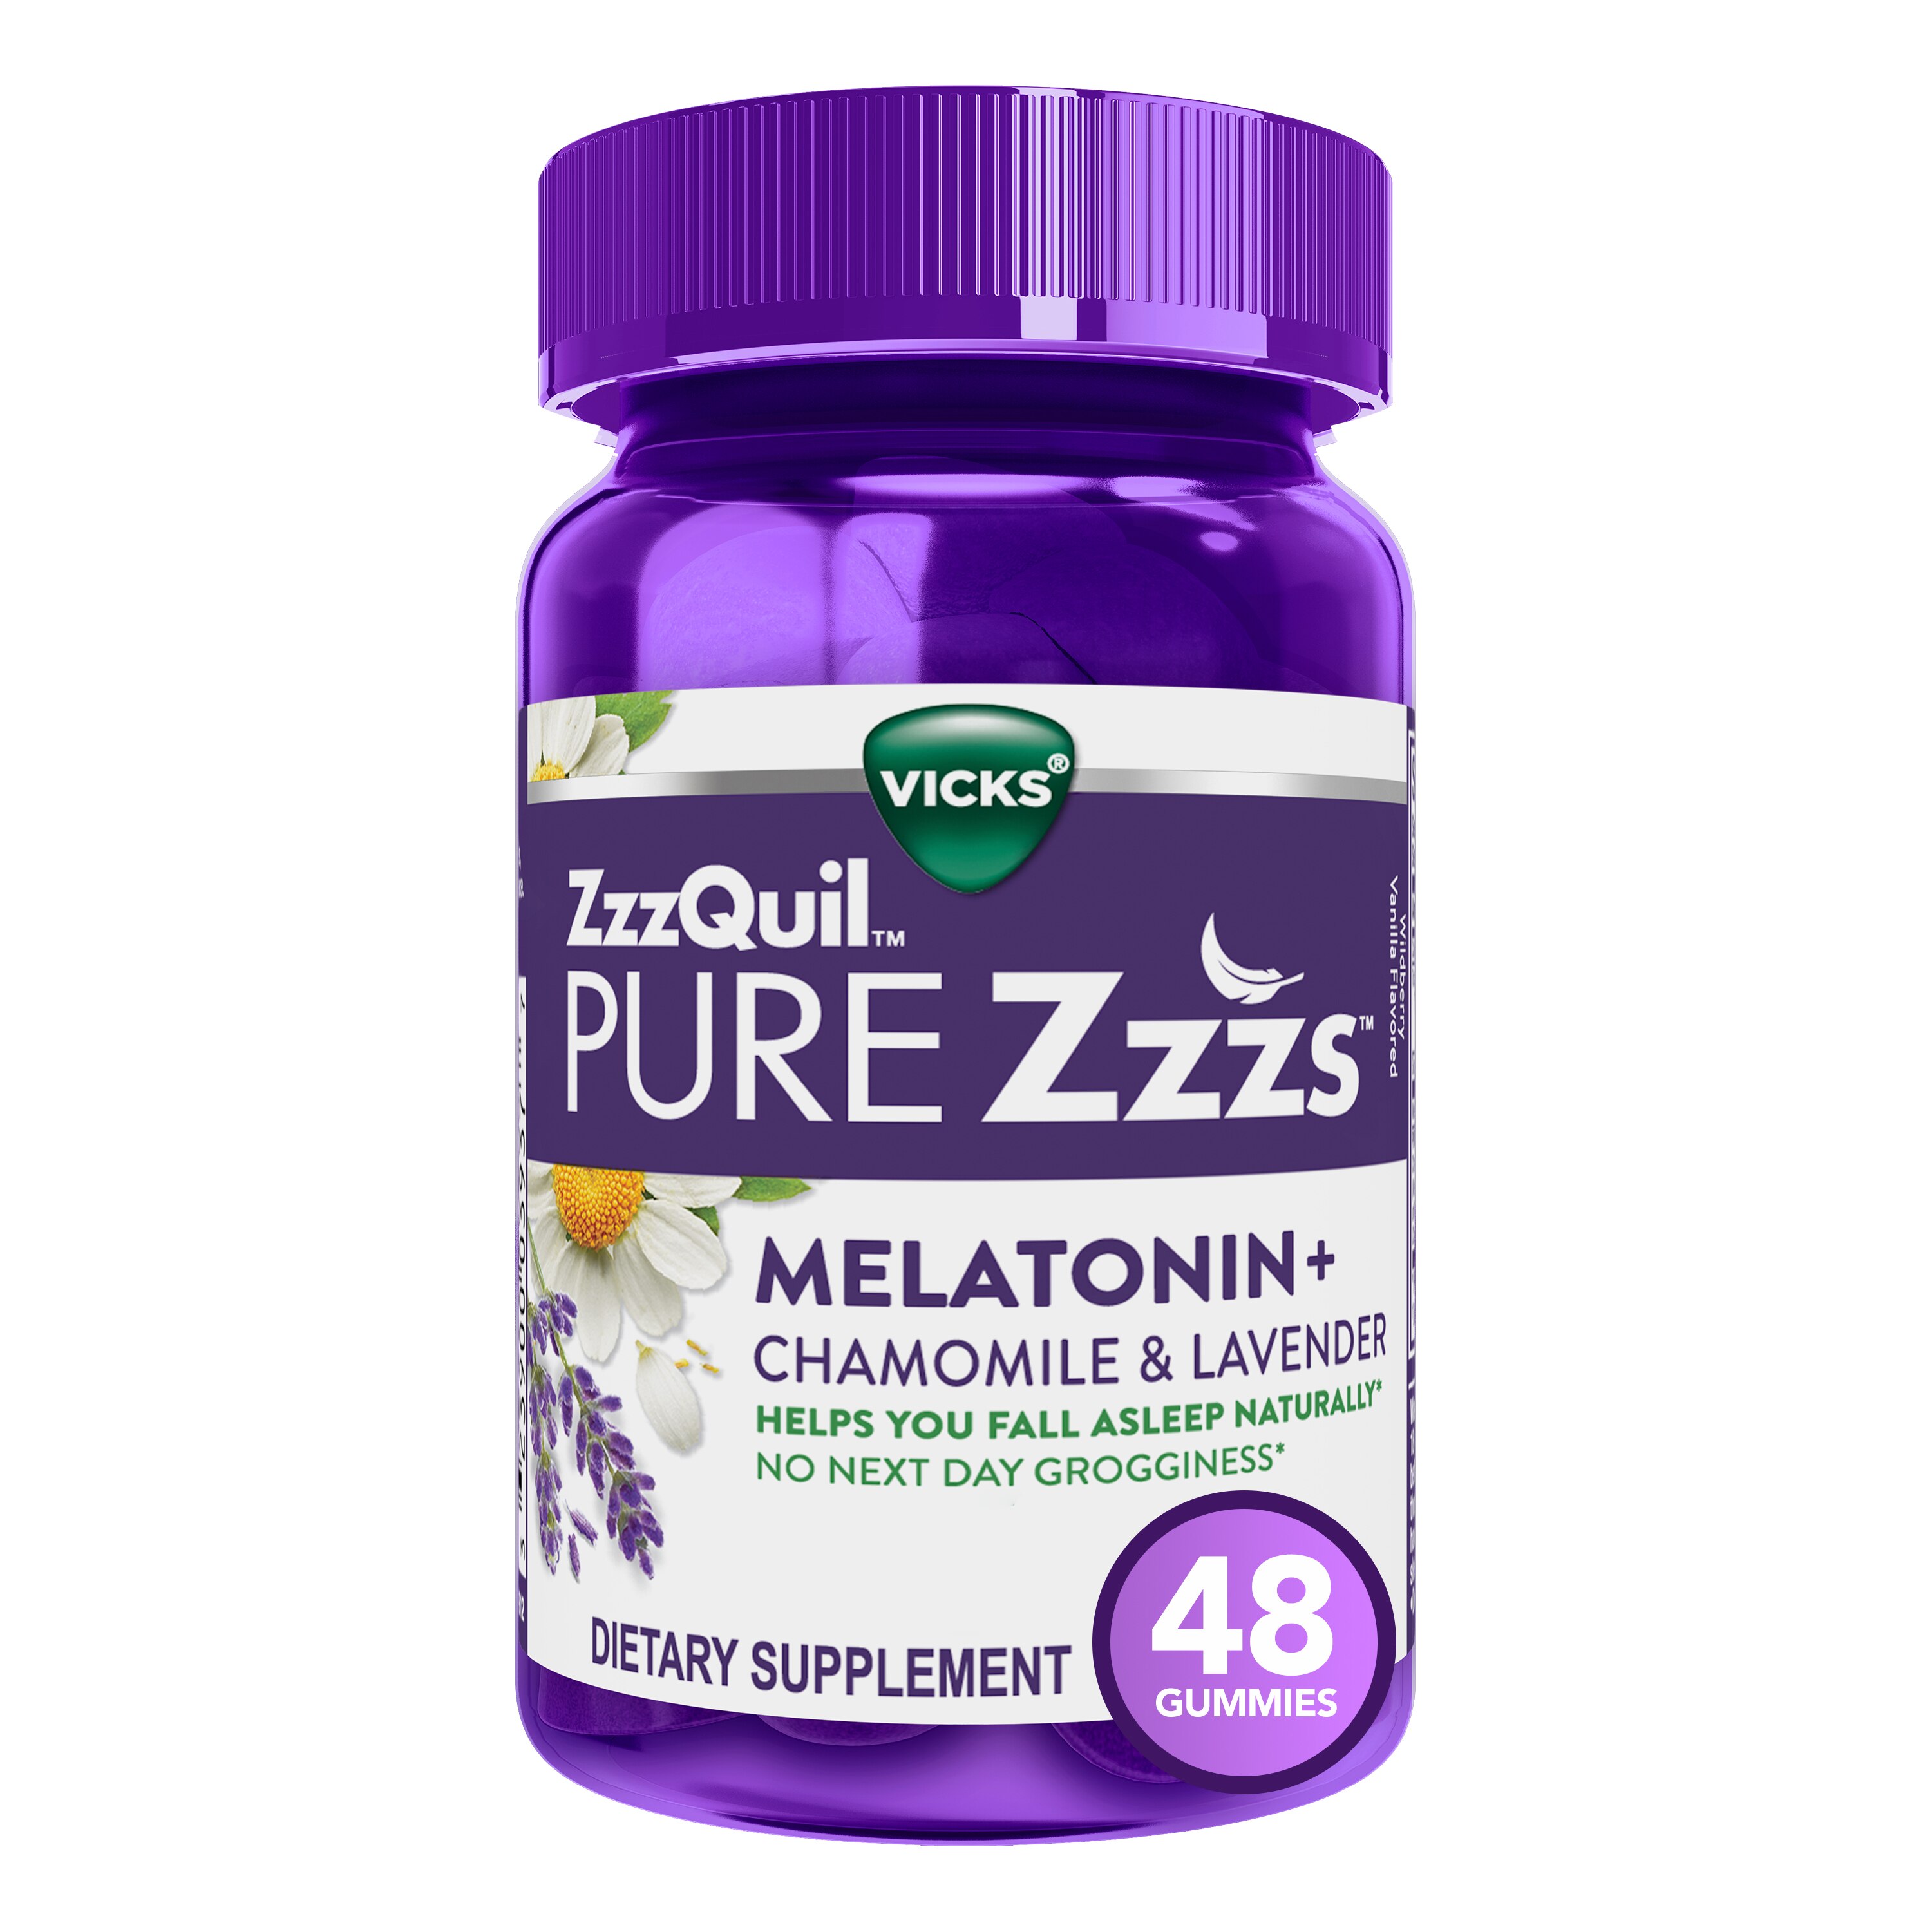 ZzzQuil PURE Zzzs Melatonin Sleep Aid Gummies, Wildberry Vanilla Flavor, Chamomile Lavender & Valerian Root, 1mg per gummy